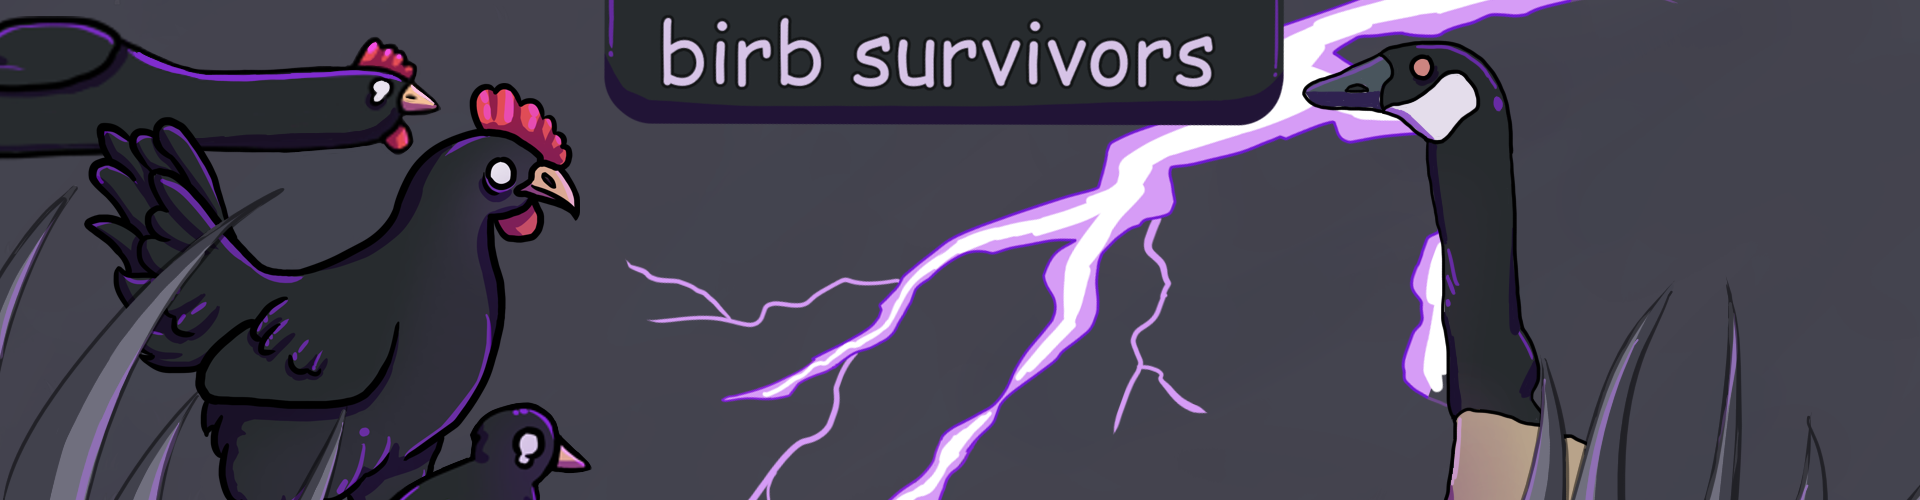 birb survivors